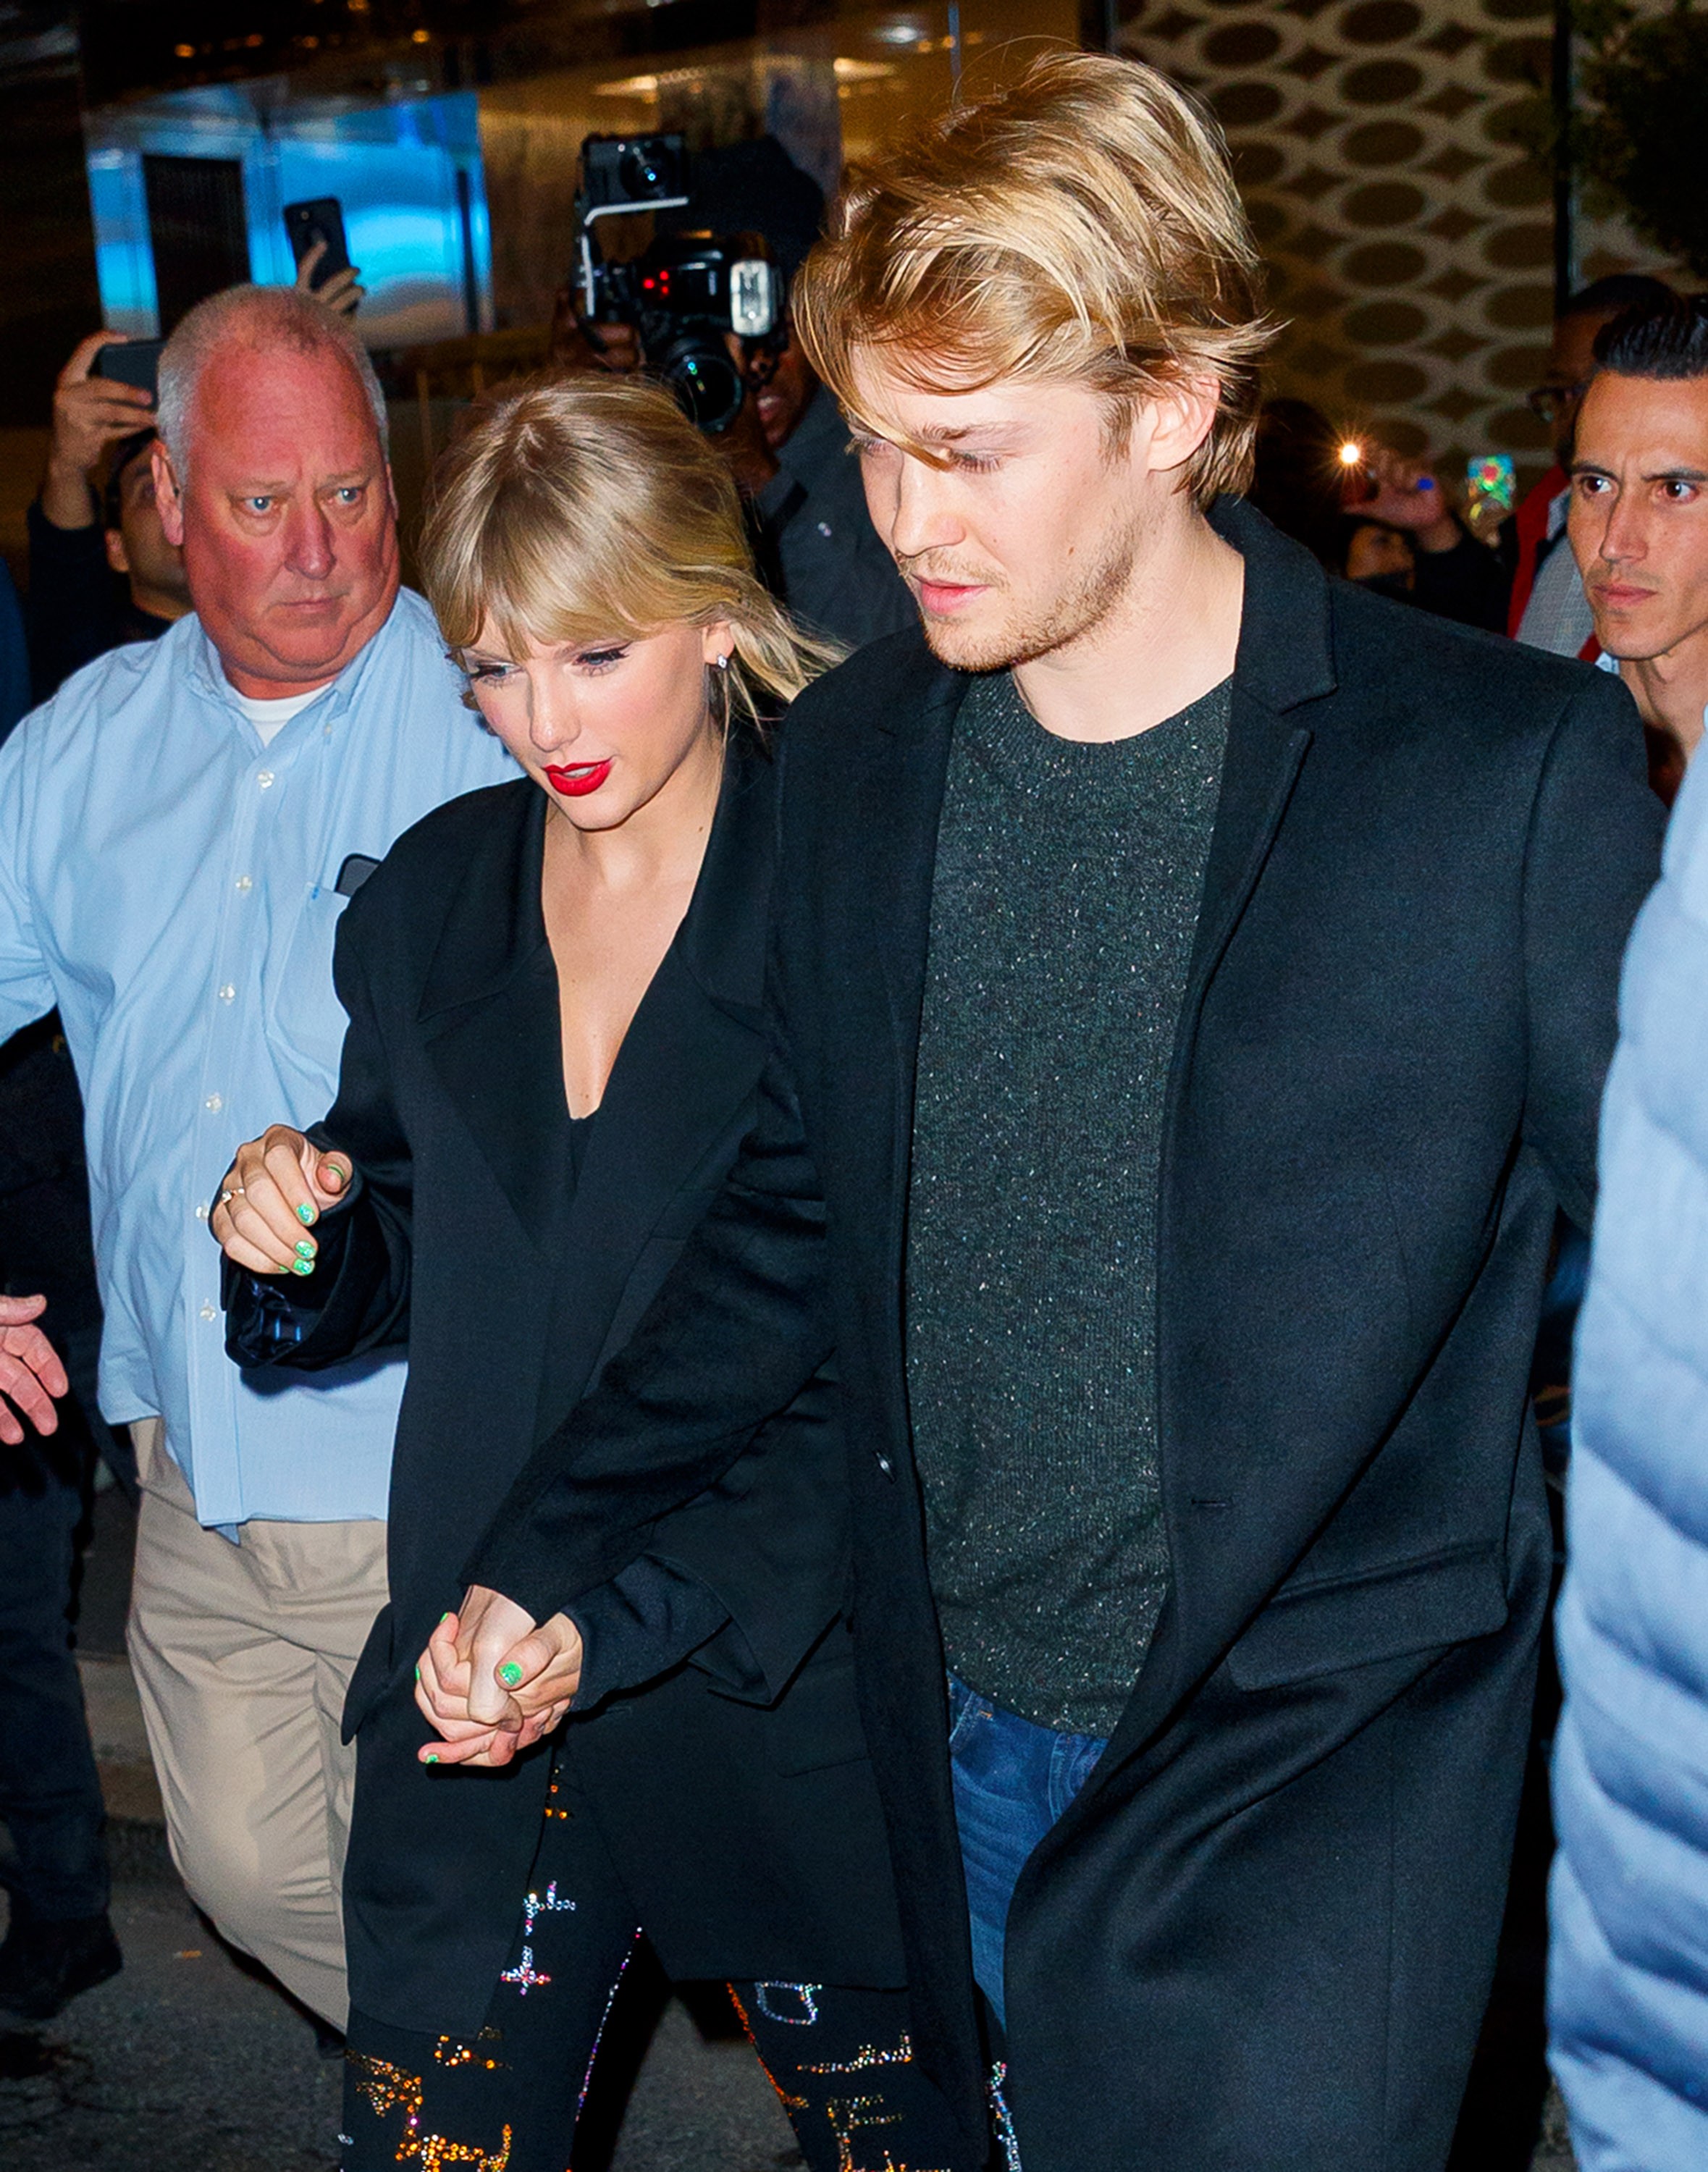 Taylor Swift and her boyfriend Joe Alwyn (Photo: Getty Images)